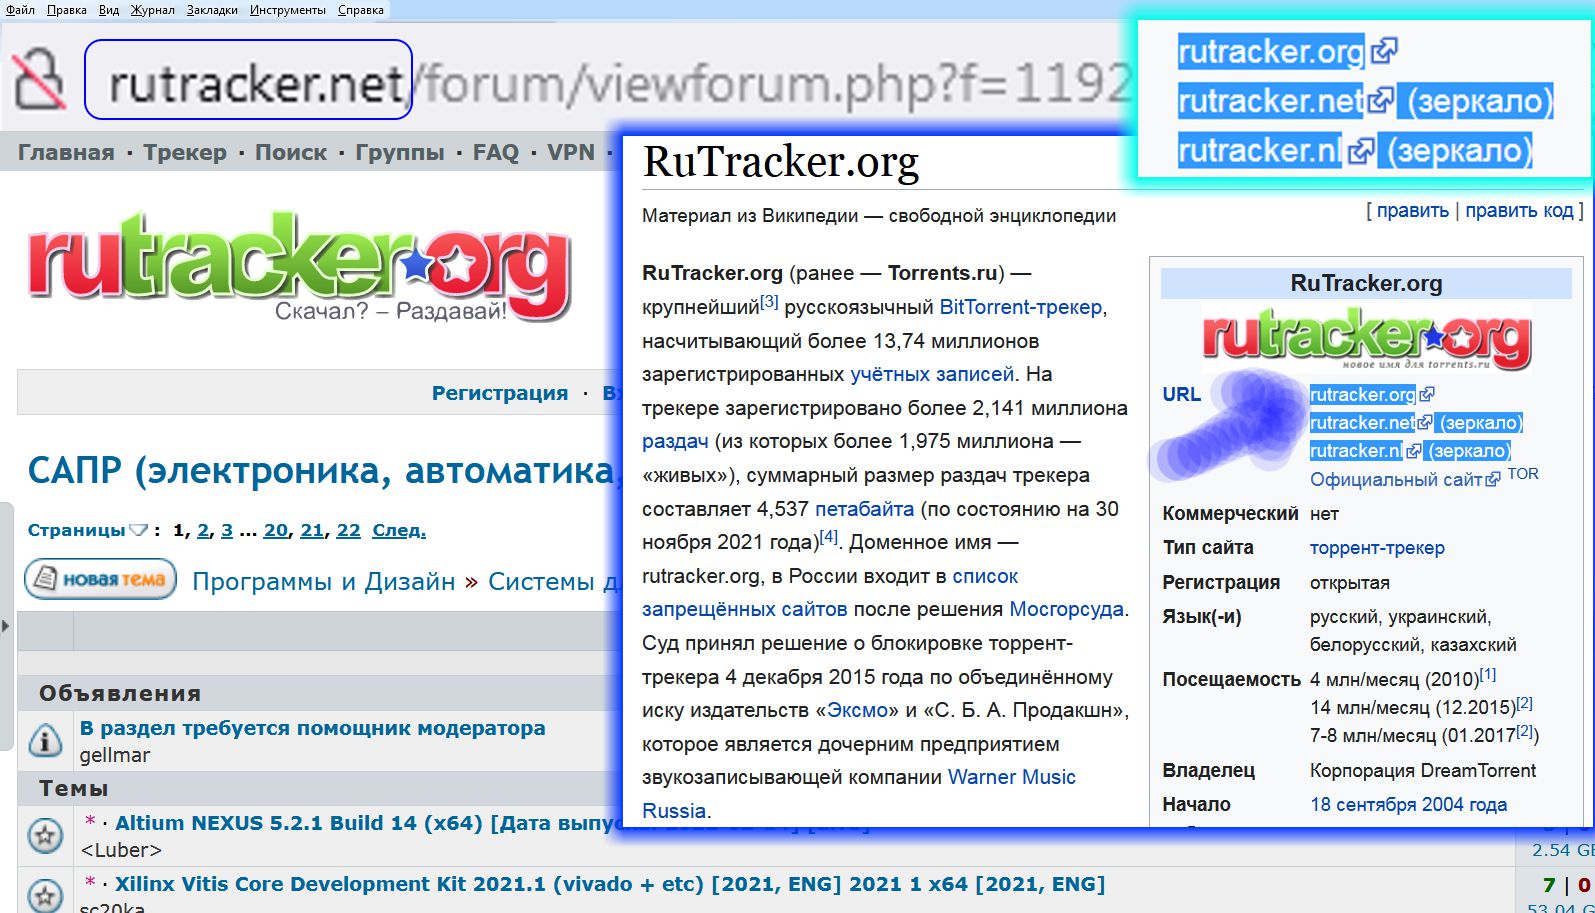 Rutracker net forum. Rutracker net зеркало. Рутрекер rutracker.org зеркало. Rutracker org зеркало 2020.